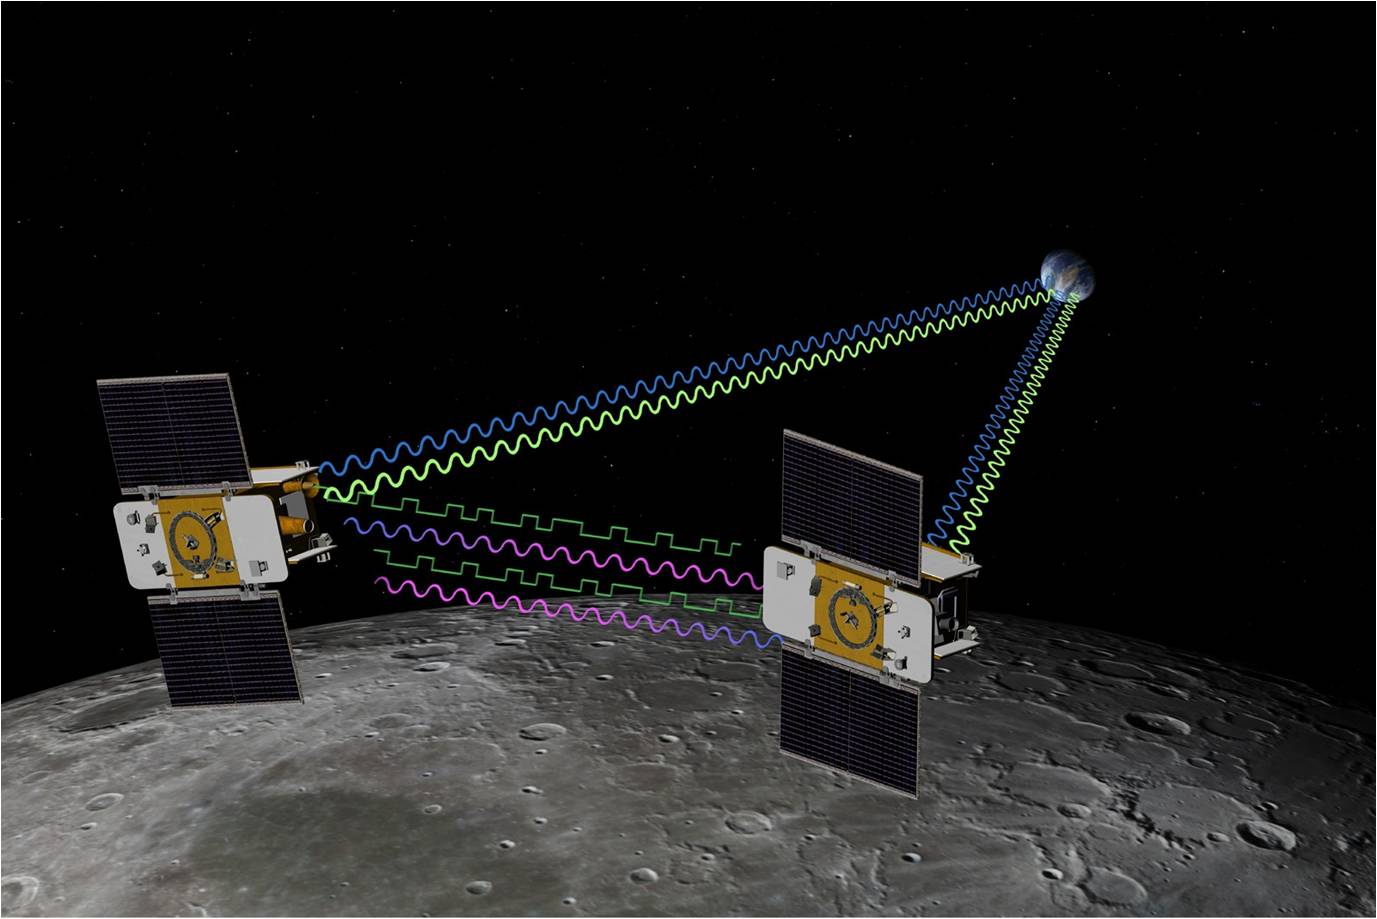 Ilustrasi seorang seniman menunjukkan dua pesawat ruang angkasa bersayap bertenaga surya yang dihubungkan oleh garis bergelombang yang melambangkan komunikasi.  Garis-garisnya memanjang sampai ke tanah.  Pesawat luar angkasa melayang di atas bulan.